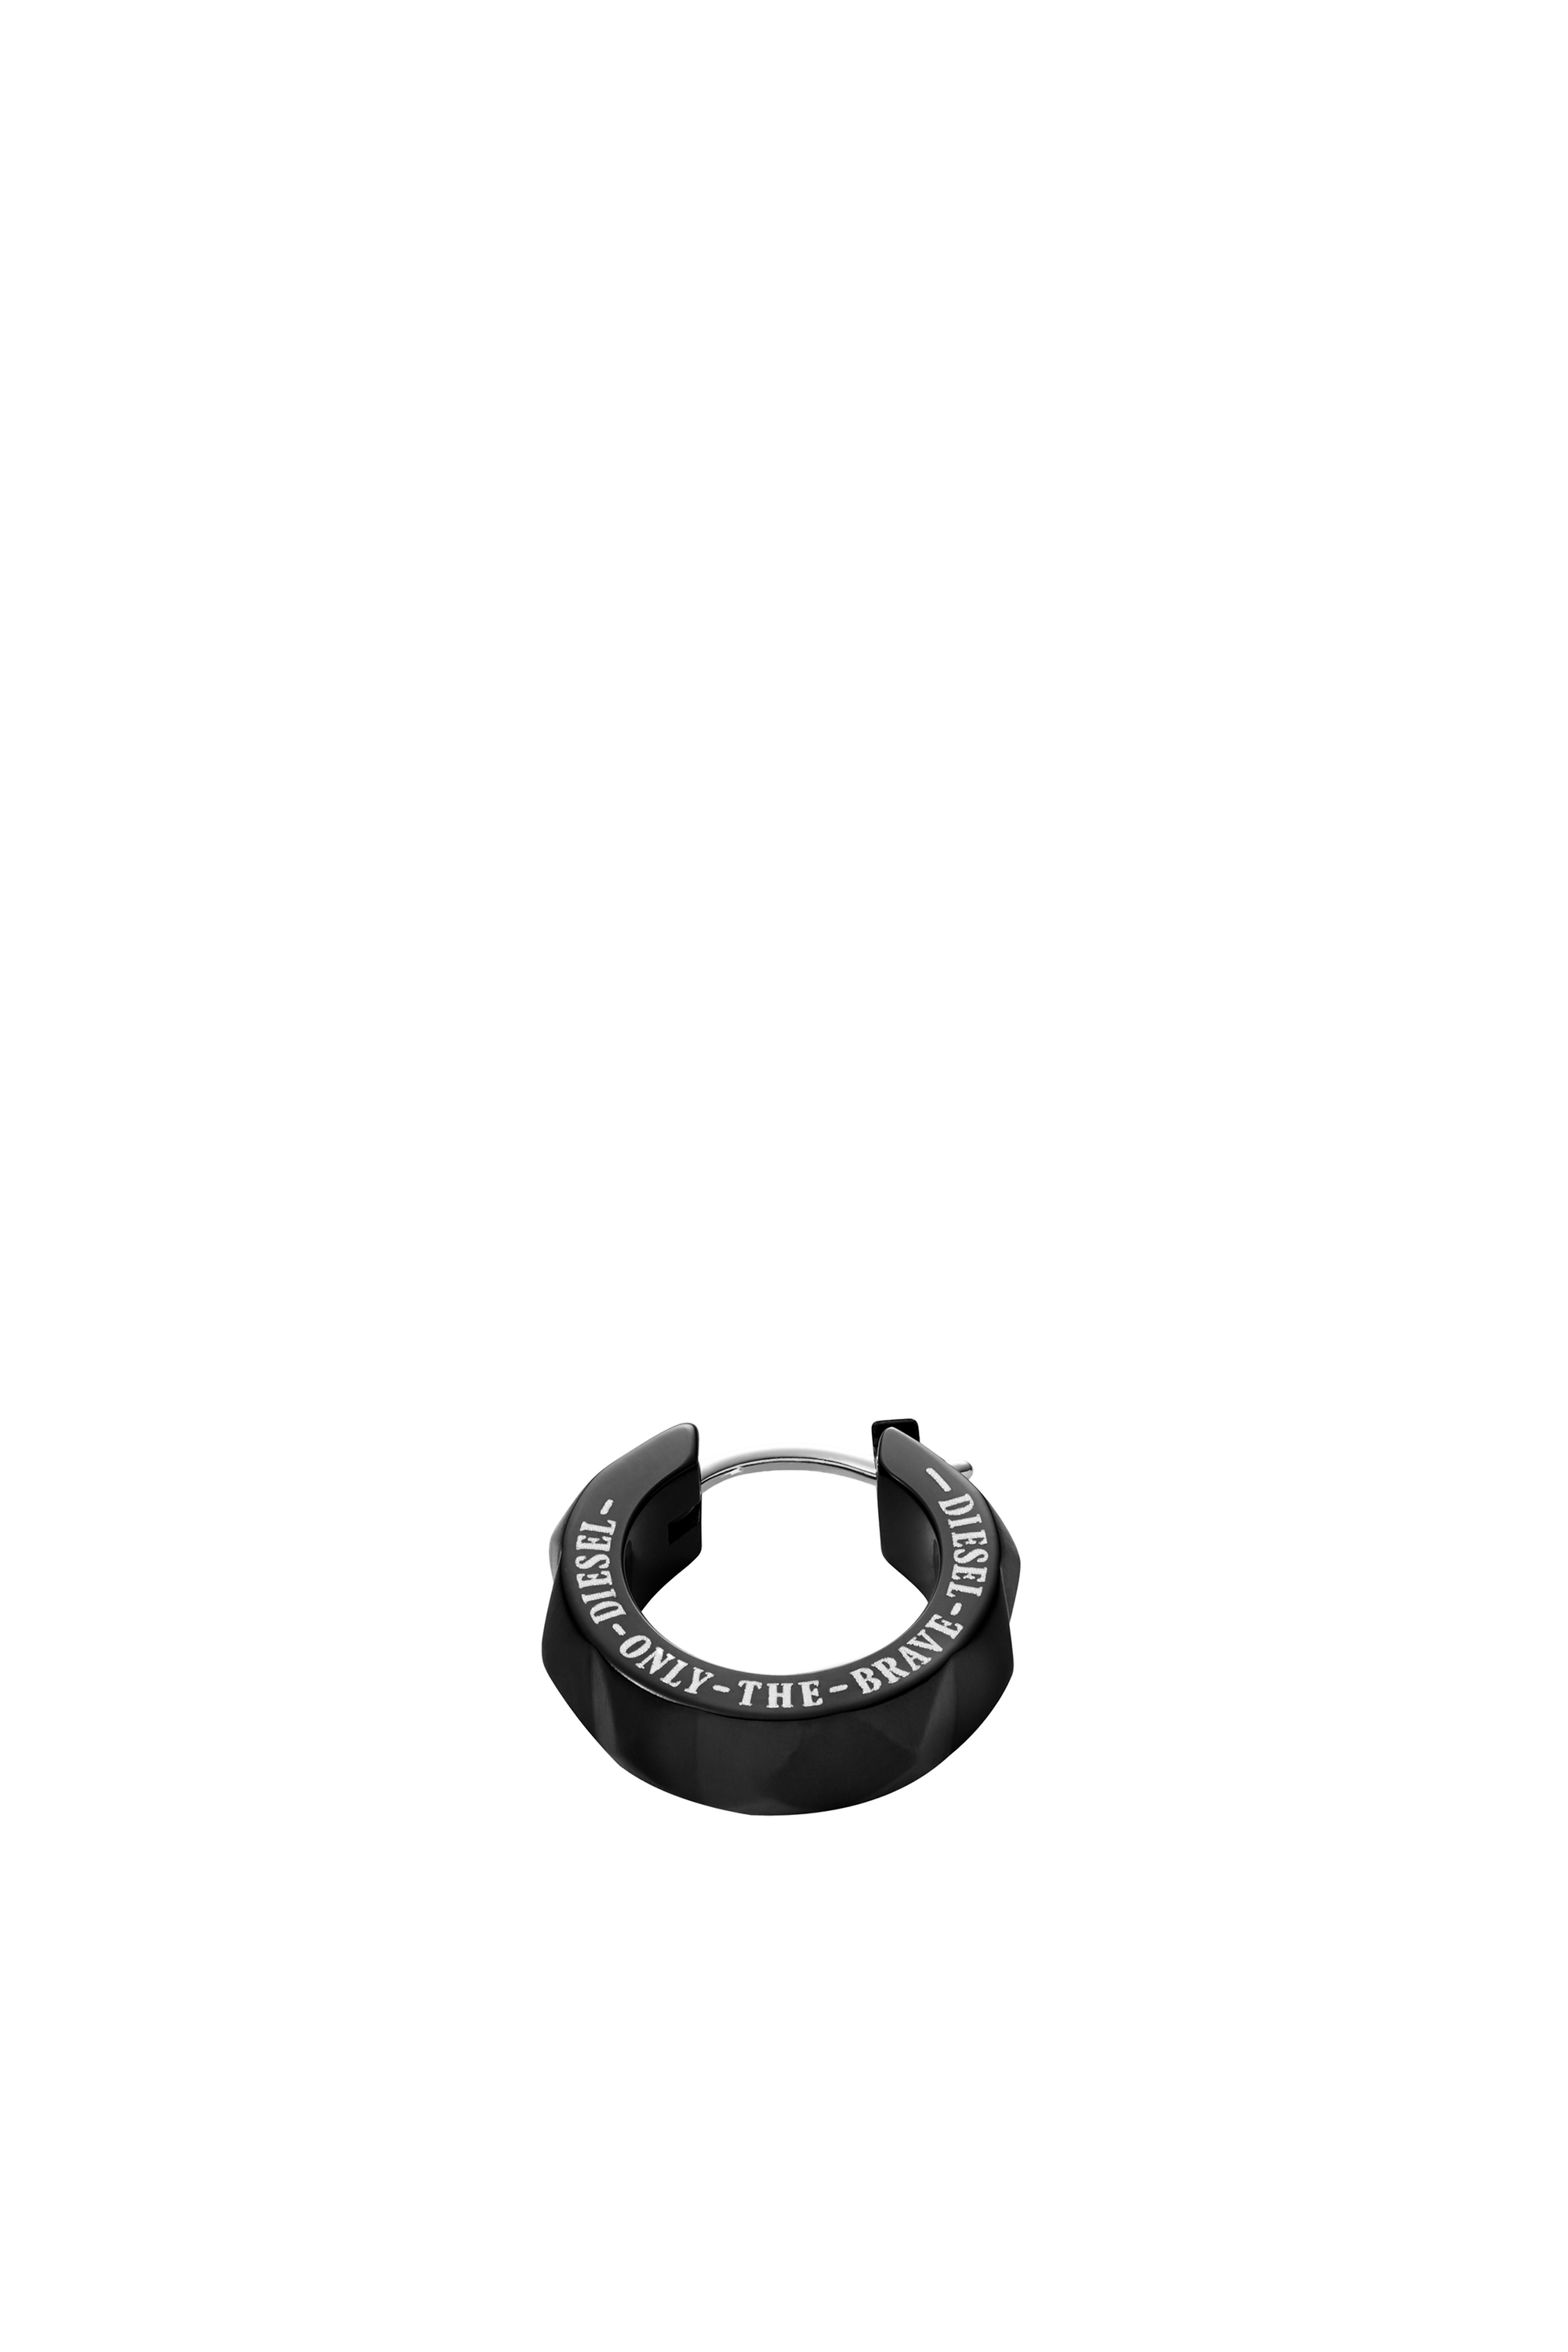 Diesel - Huggie-Ohrring aus schwarzem Edelstahl in Nietenoptik - Ohrringe - Herren - Schwarz